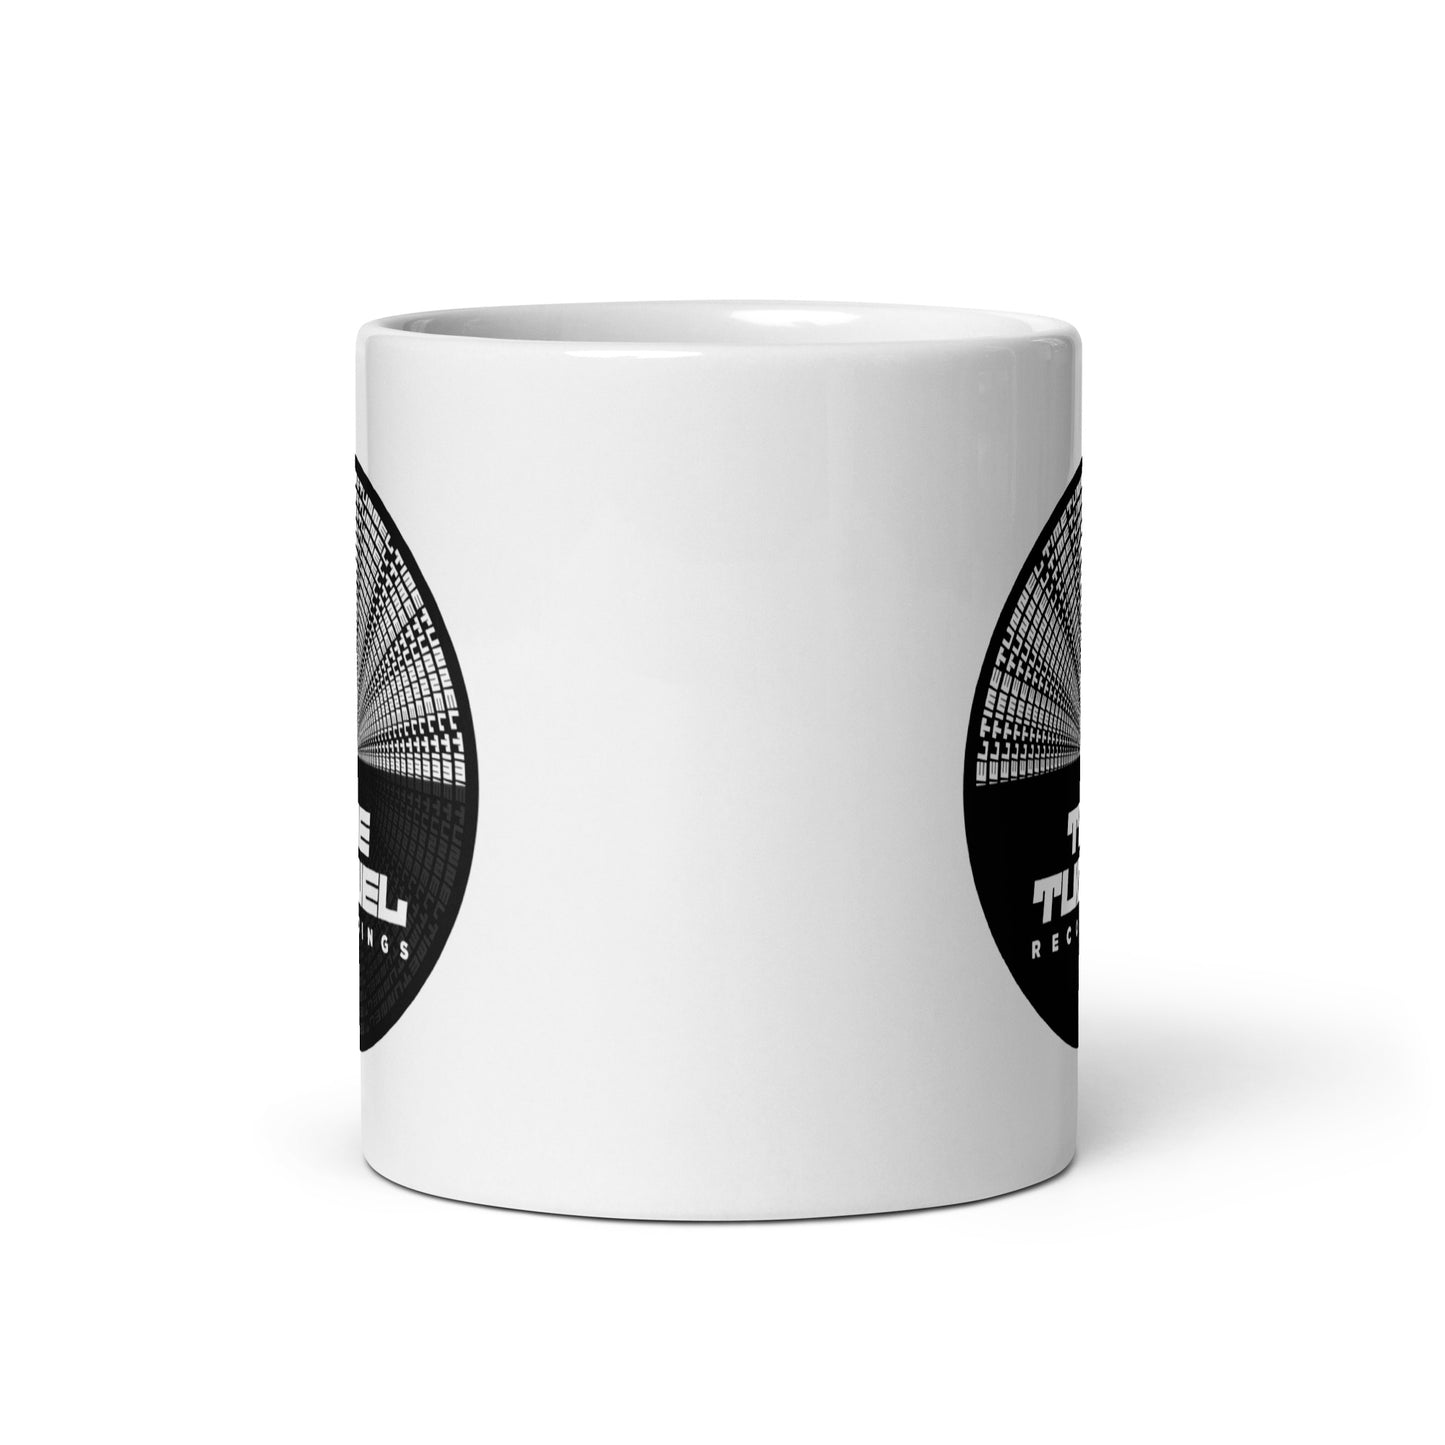 Time Tunnel White glossy mug